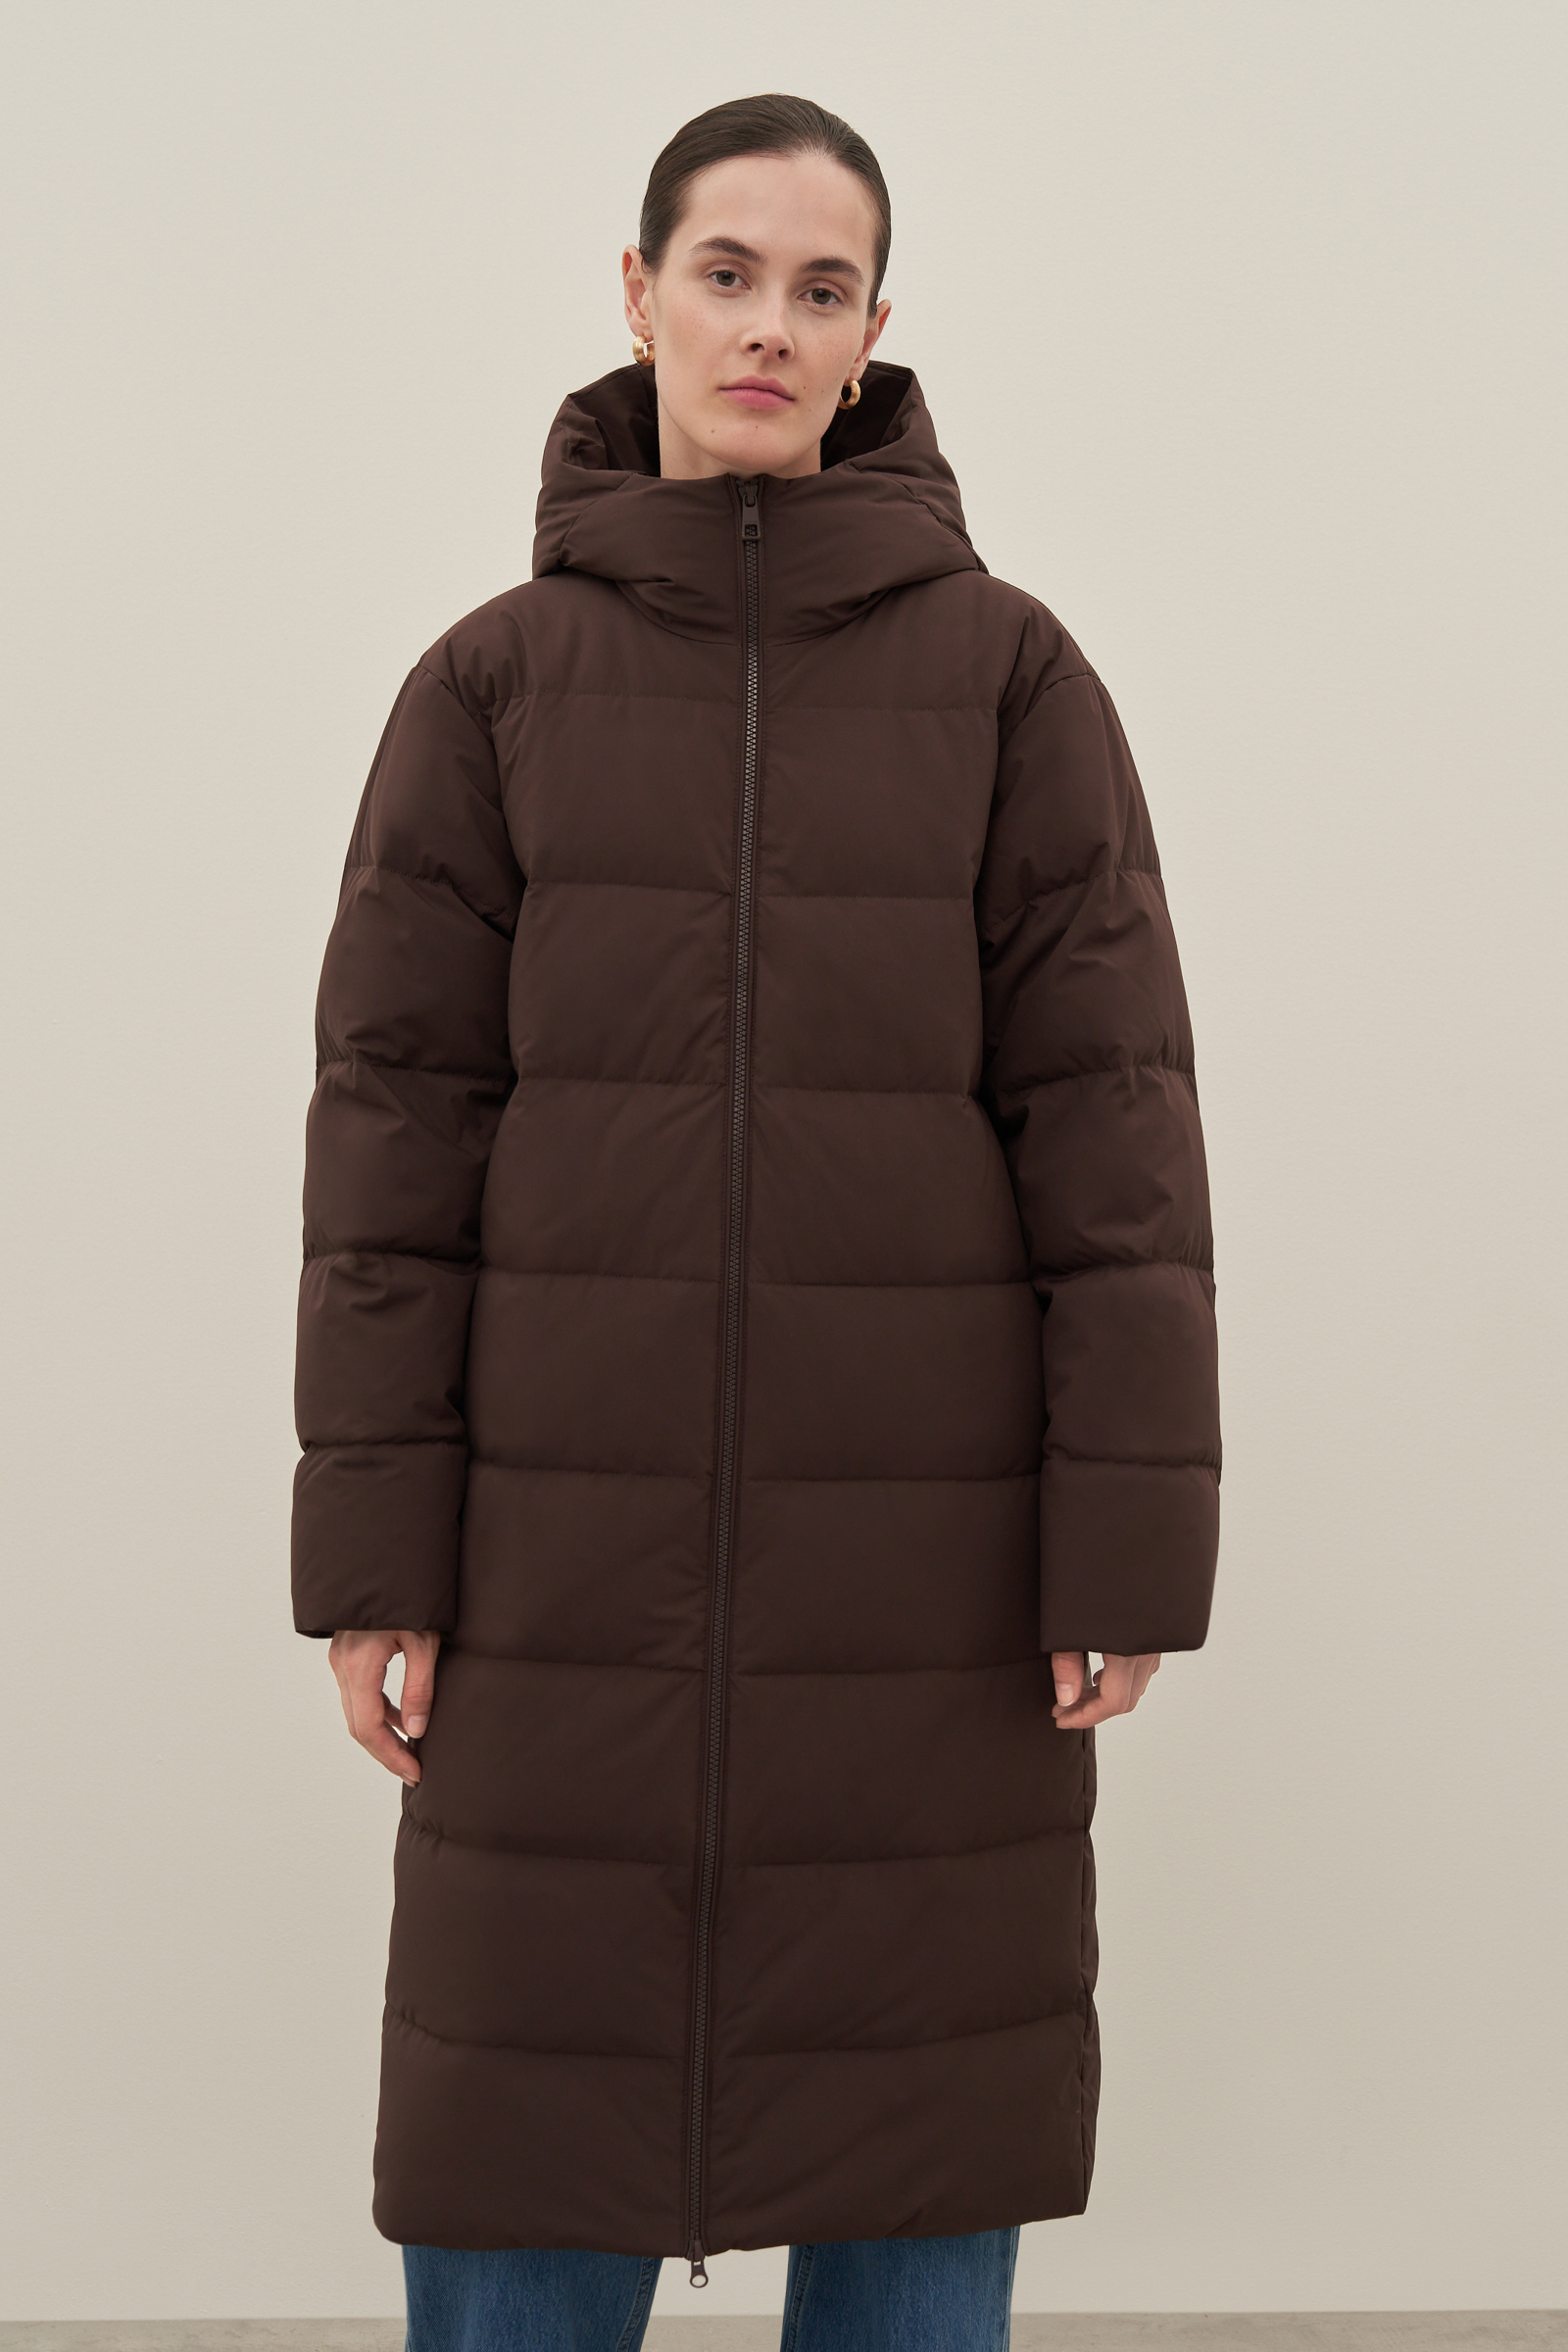 Пуховик-пальто женский Finn Flare FAD110100 коричневый S